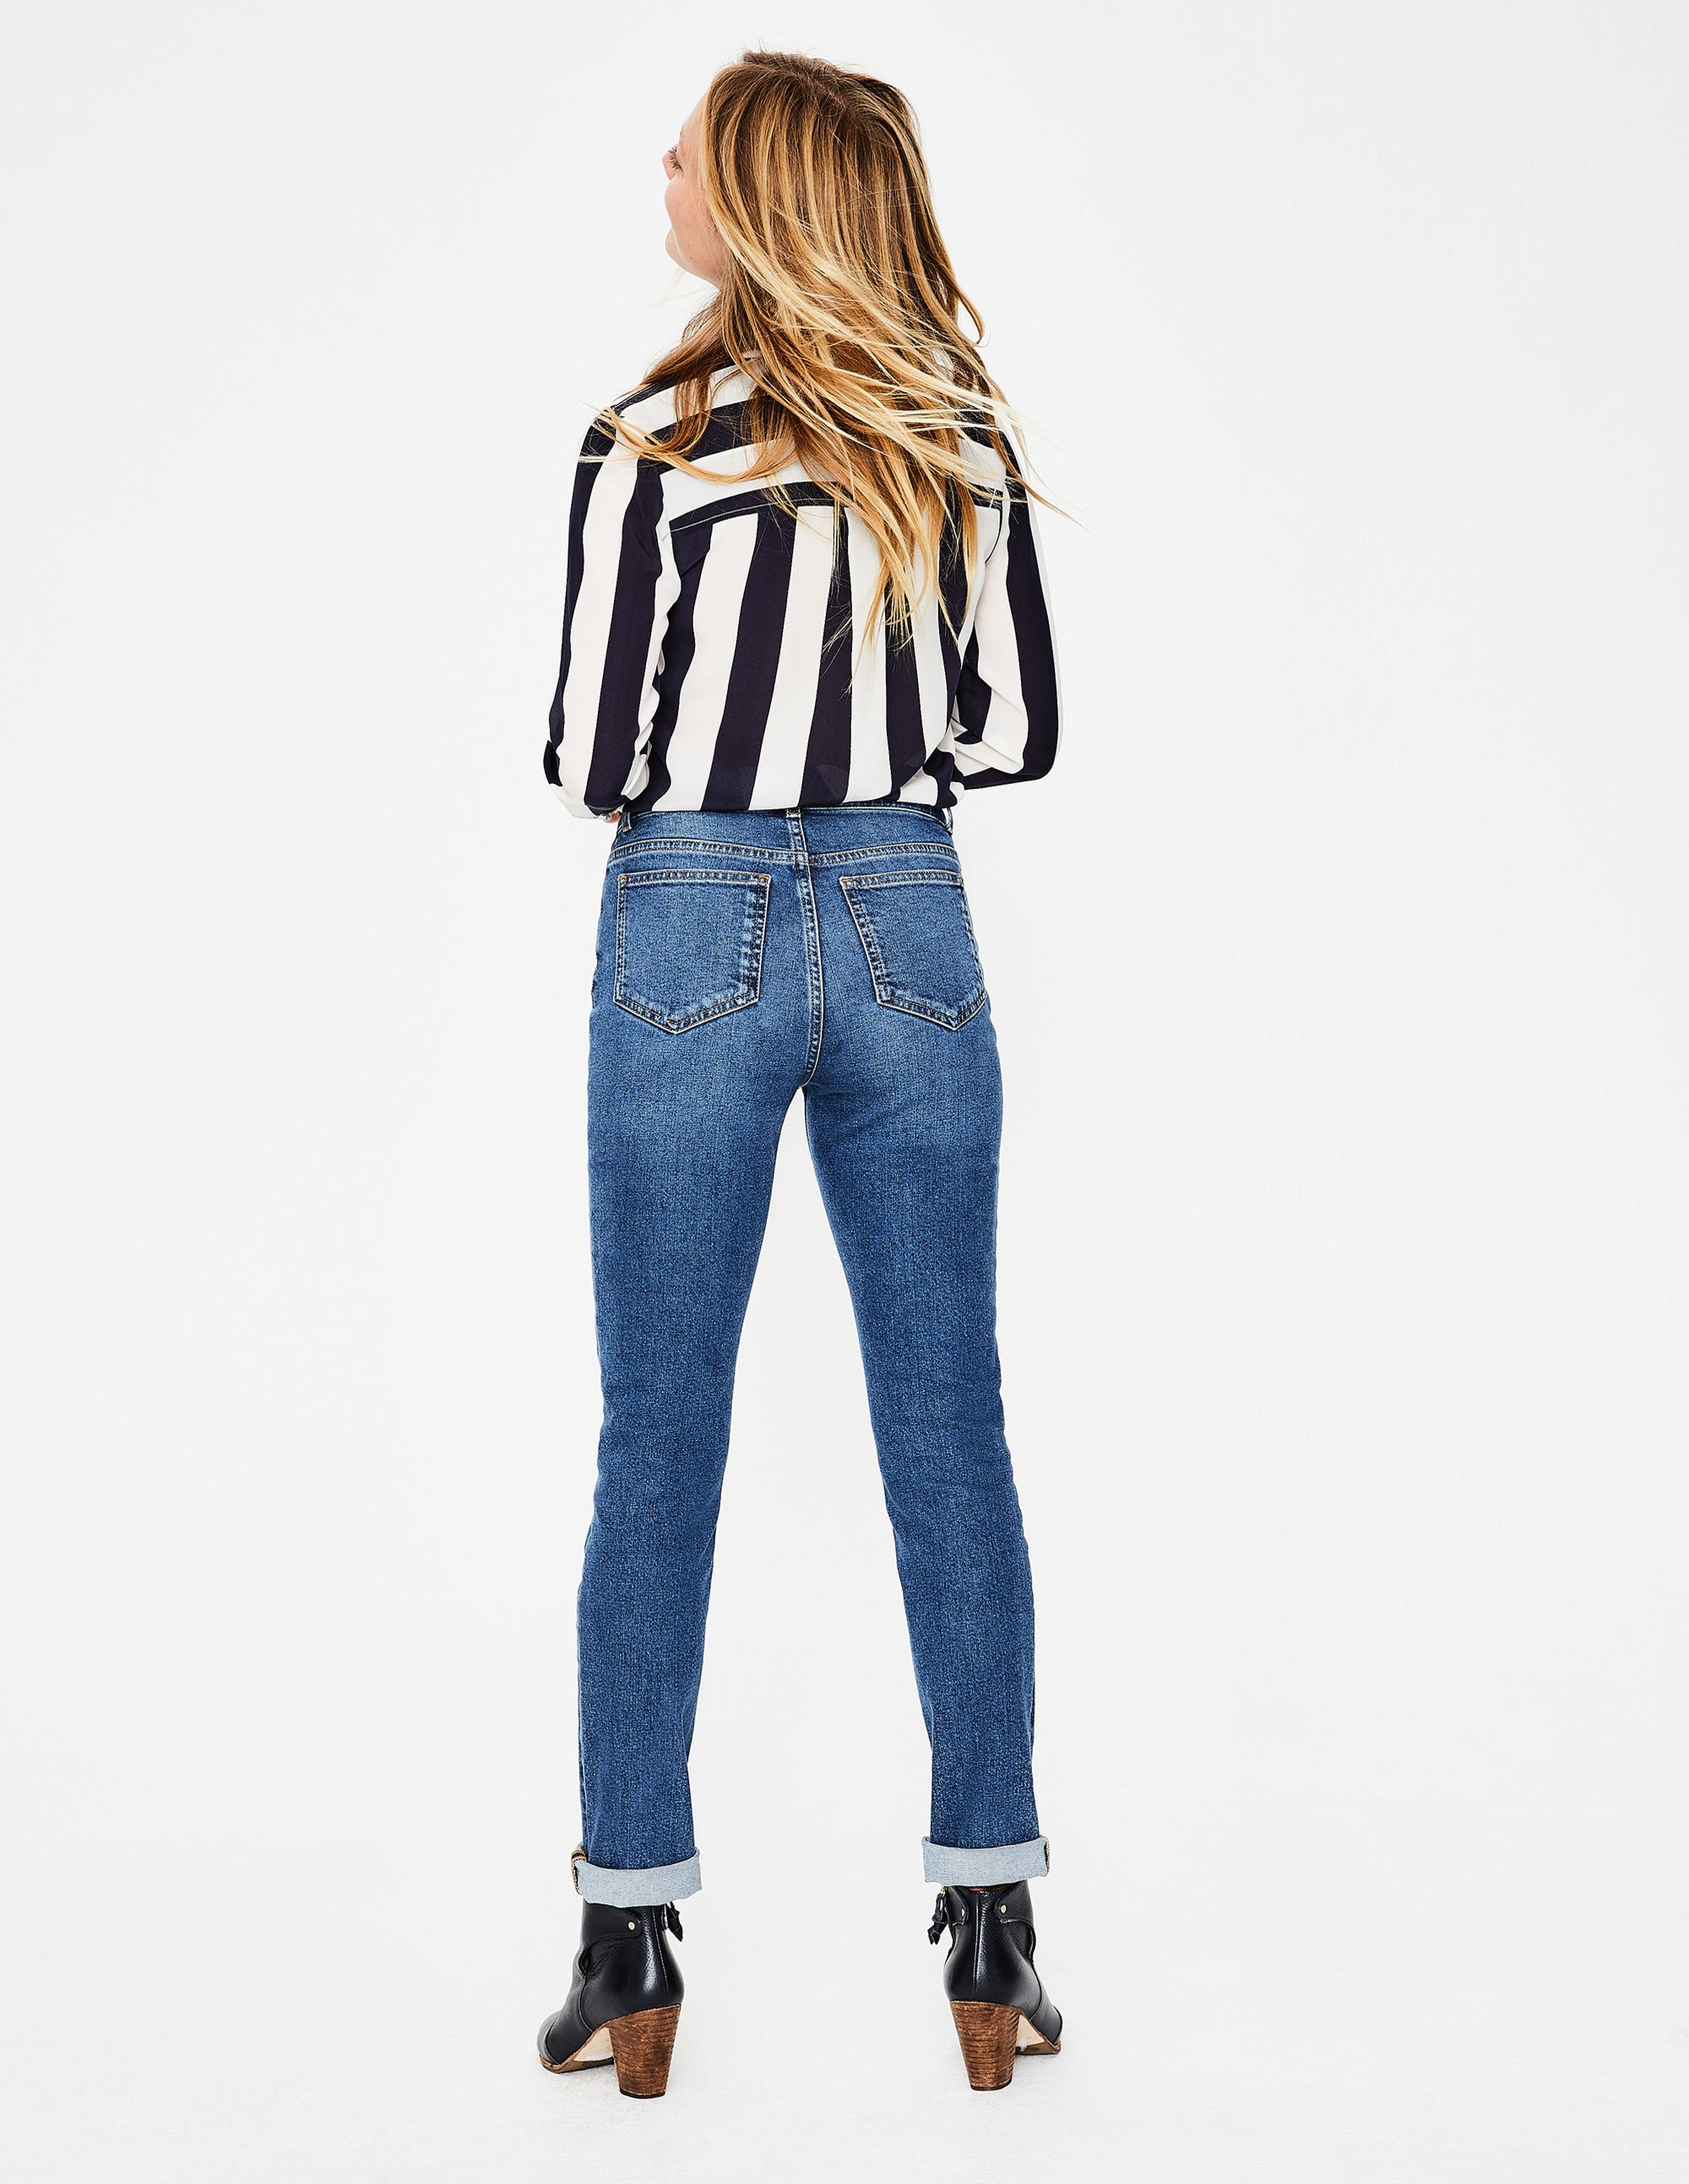 Cavendish Girlfriend Jeans - Mid Vintage | Boden UK